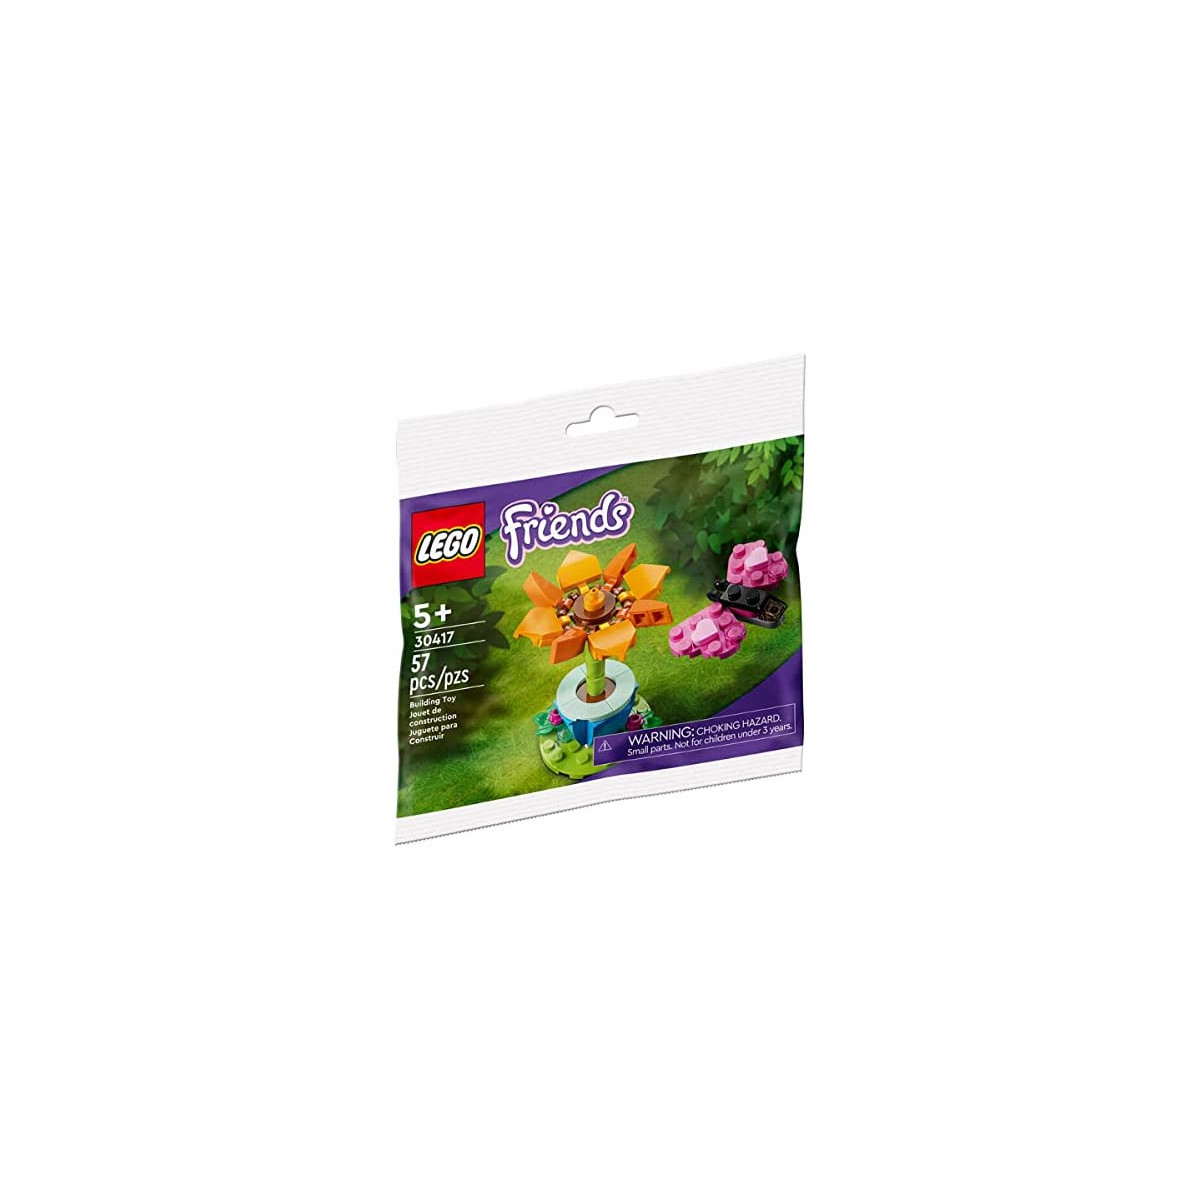 Lego 30417 - Friends polybag Garden Flower and Butterfly